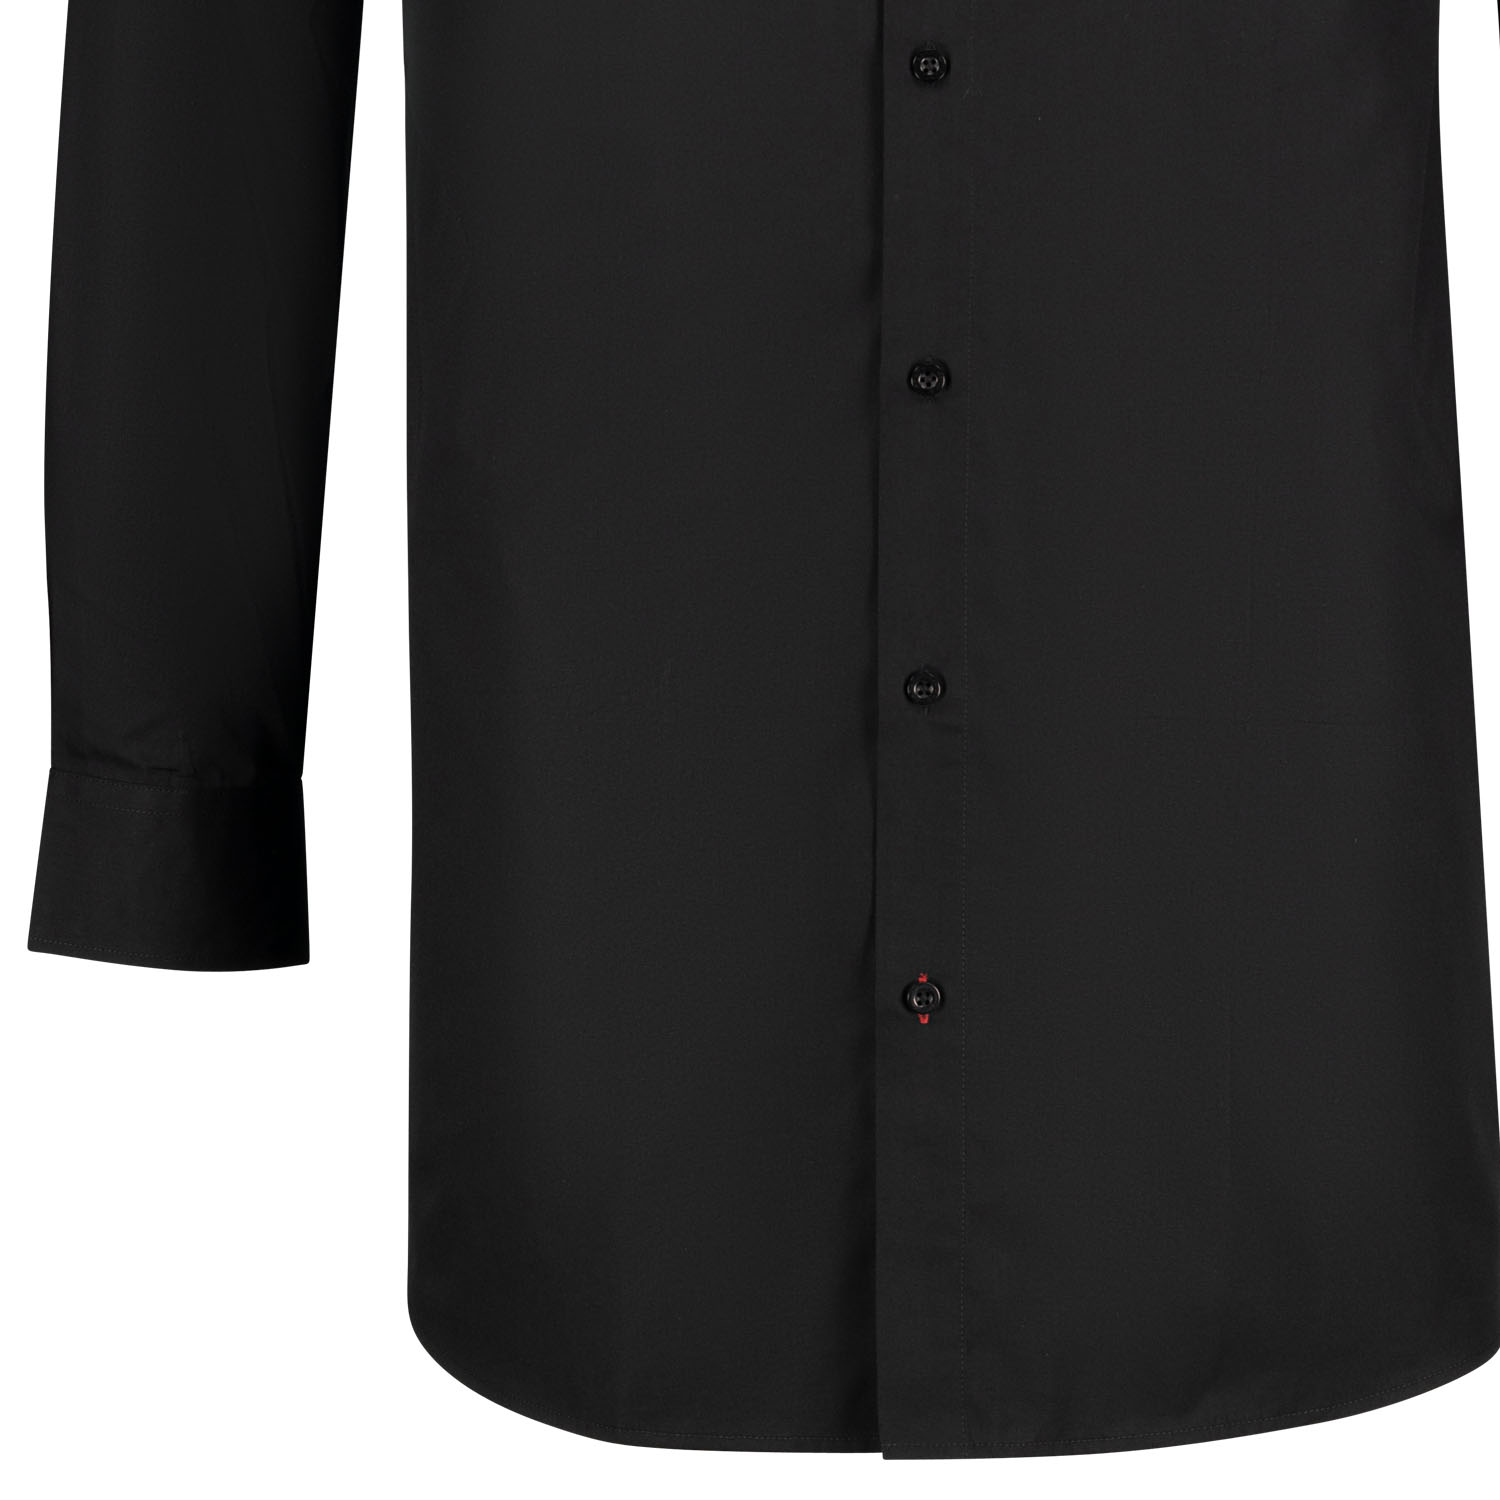 Long sleeve mens Business Shirt black Comfort Fit series JOHN by ADAMO up to oversize 10XL